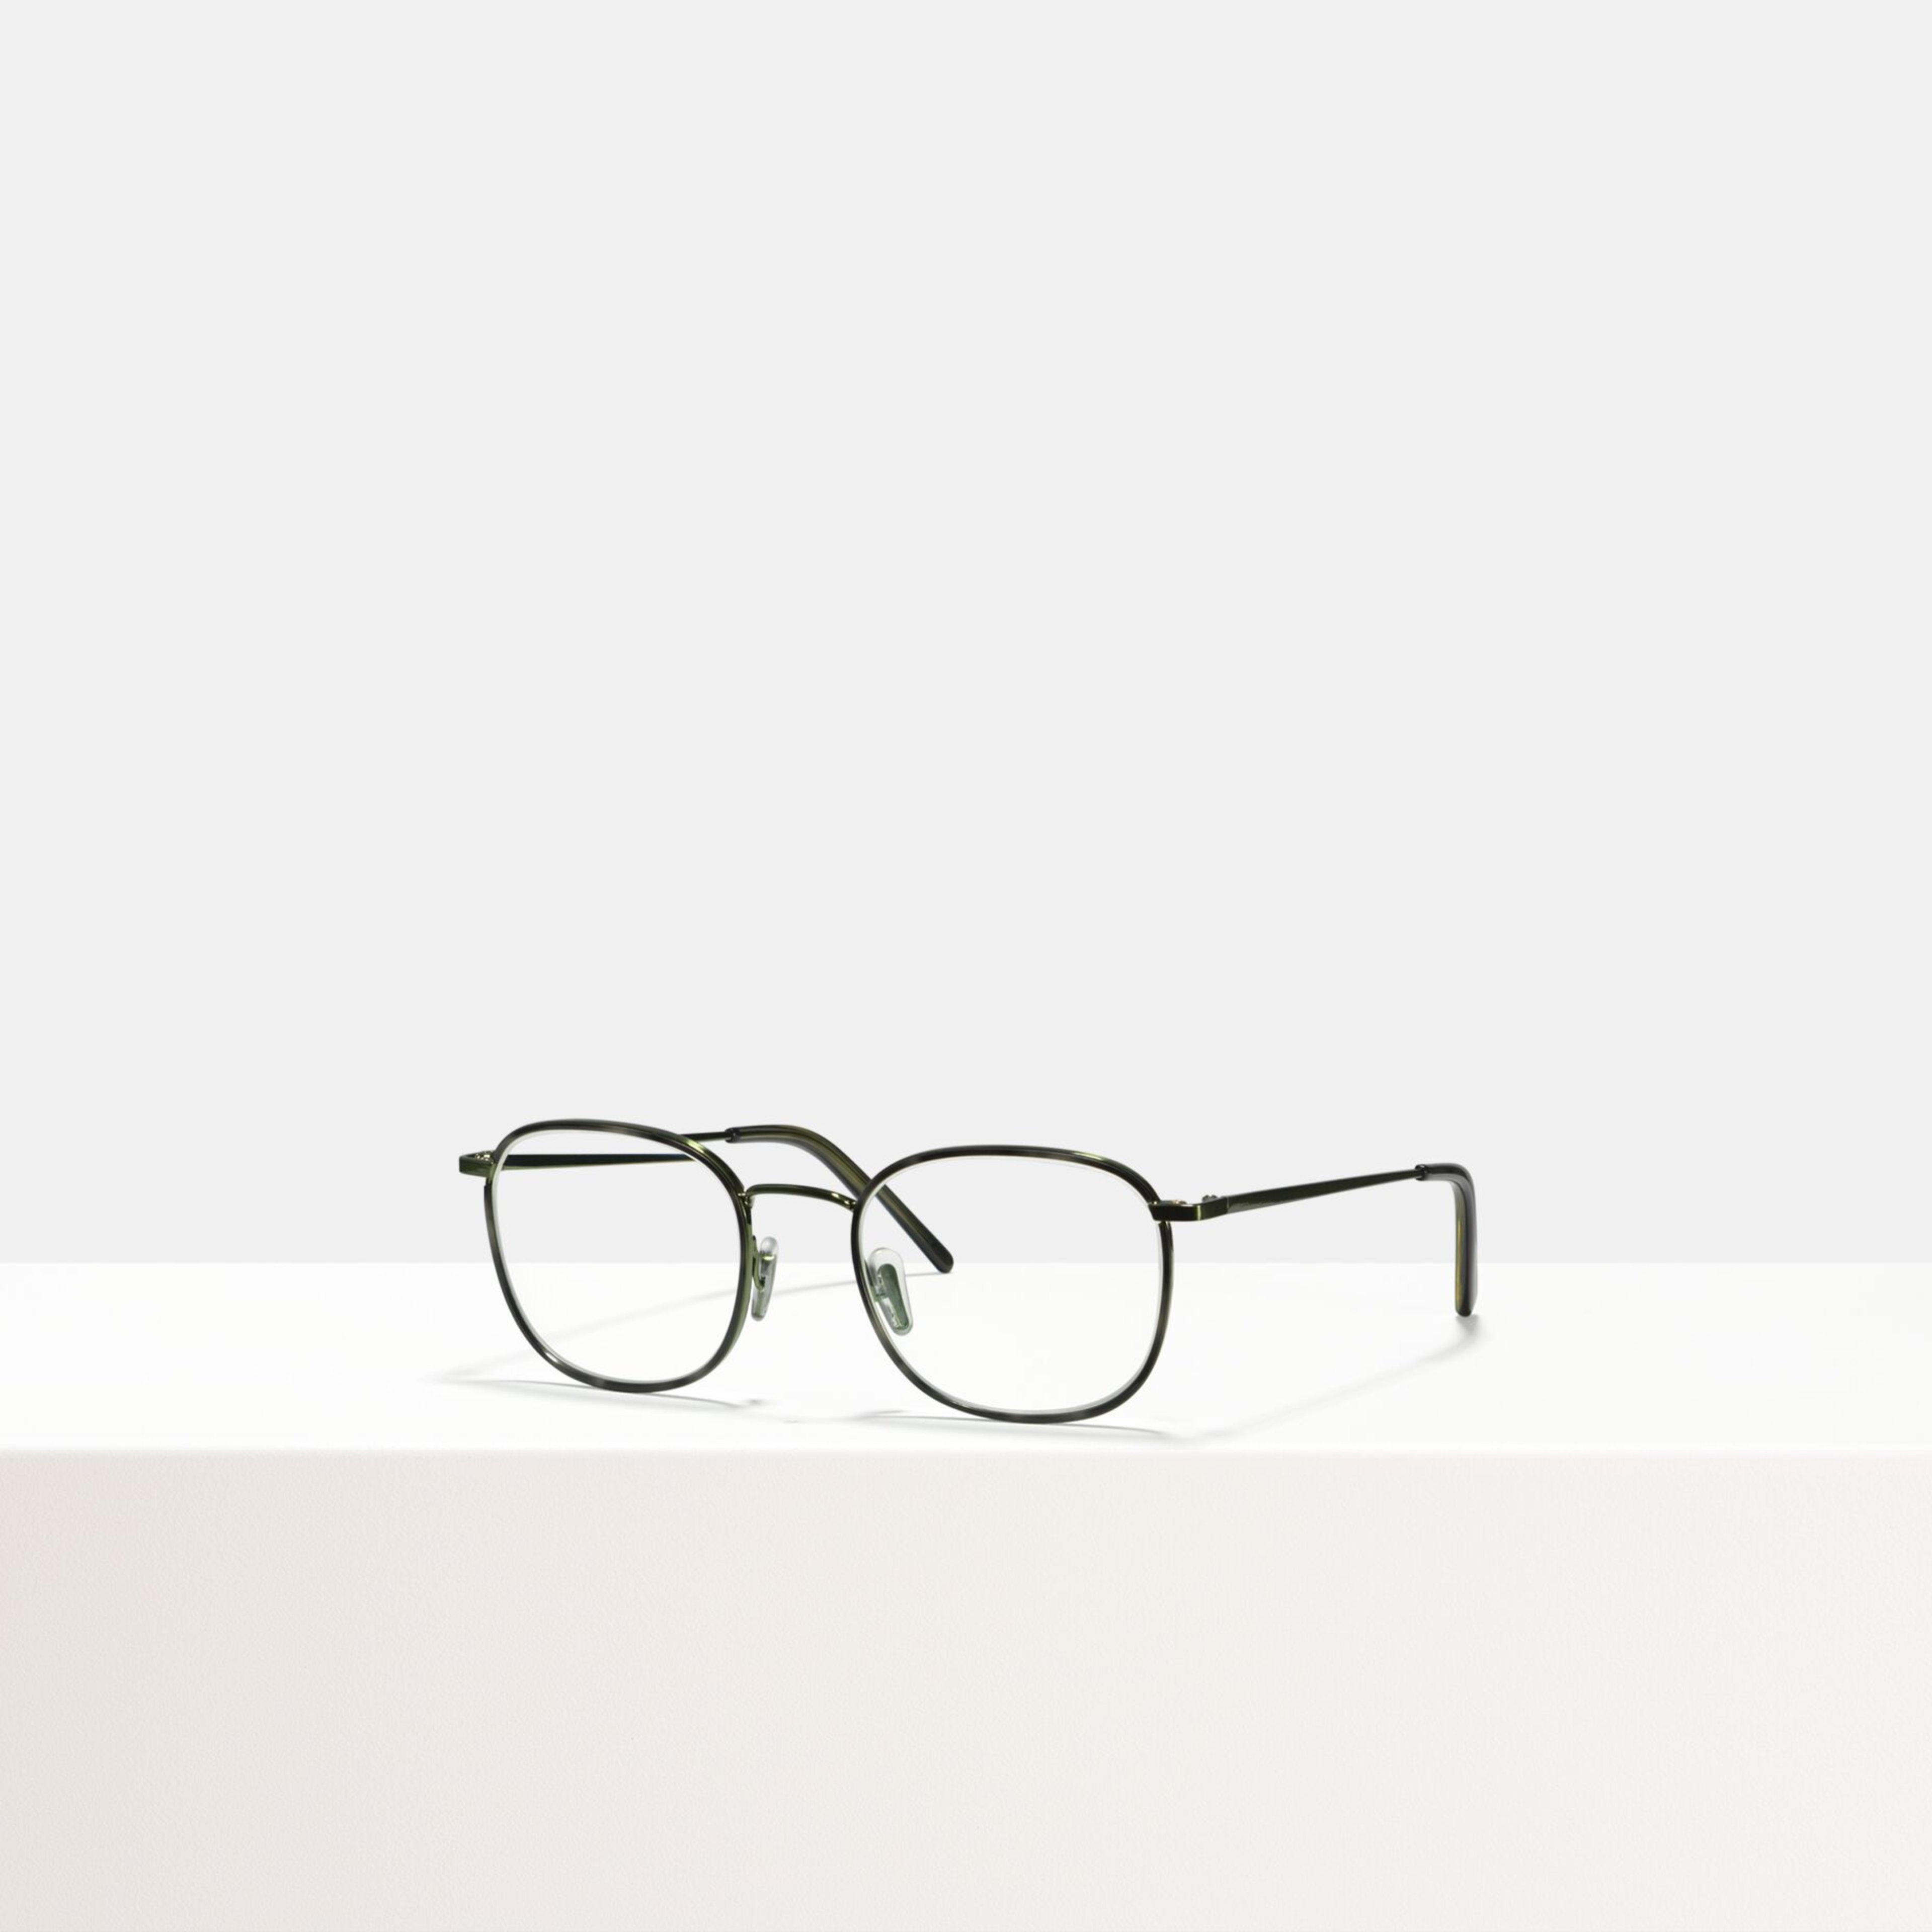 Ace & Tate Brillen | Quadratisch Verbund in Beige, Transparent, Grün, Grau